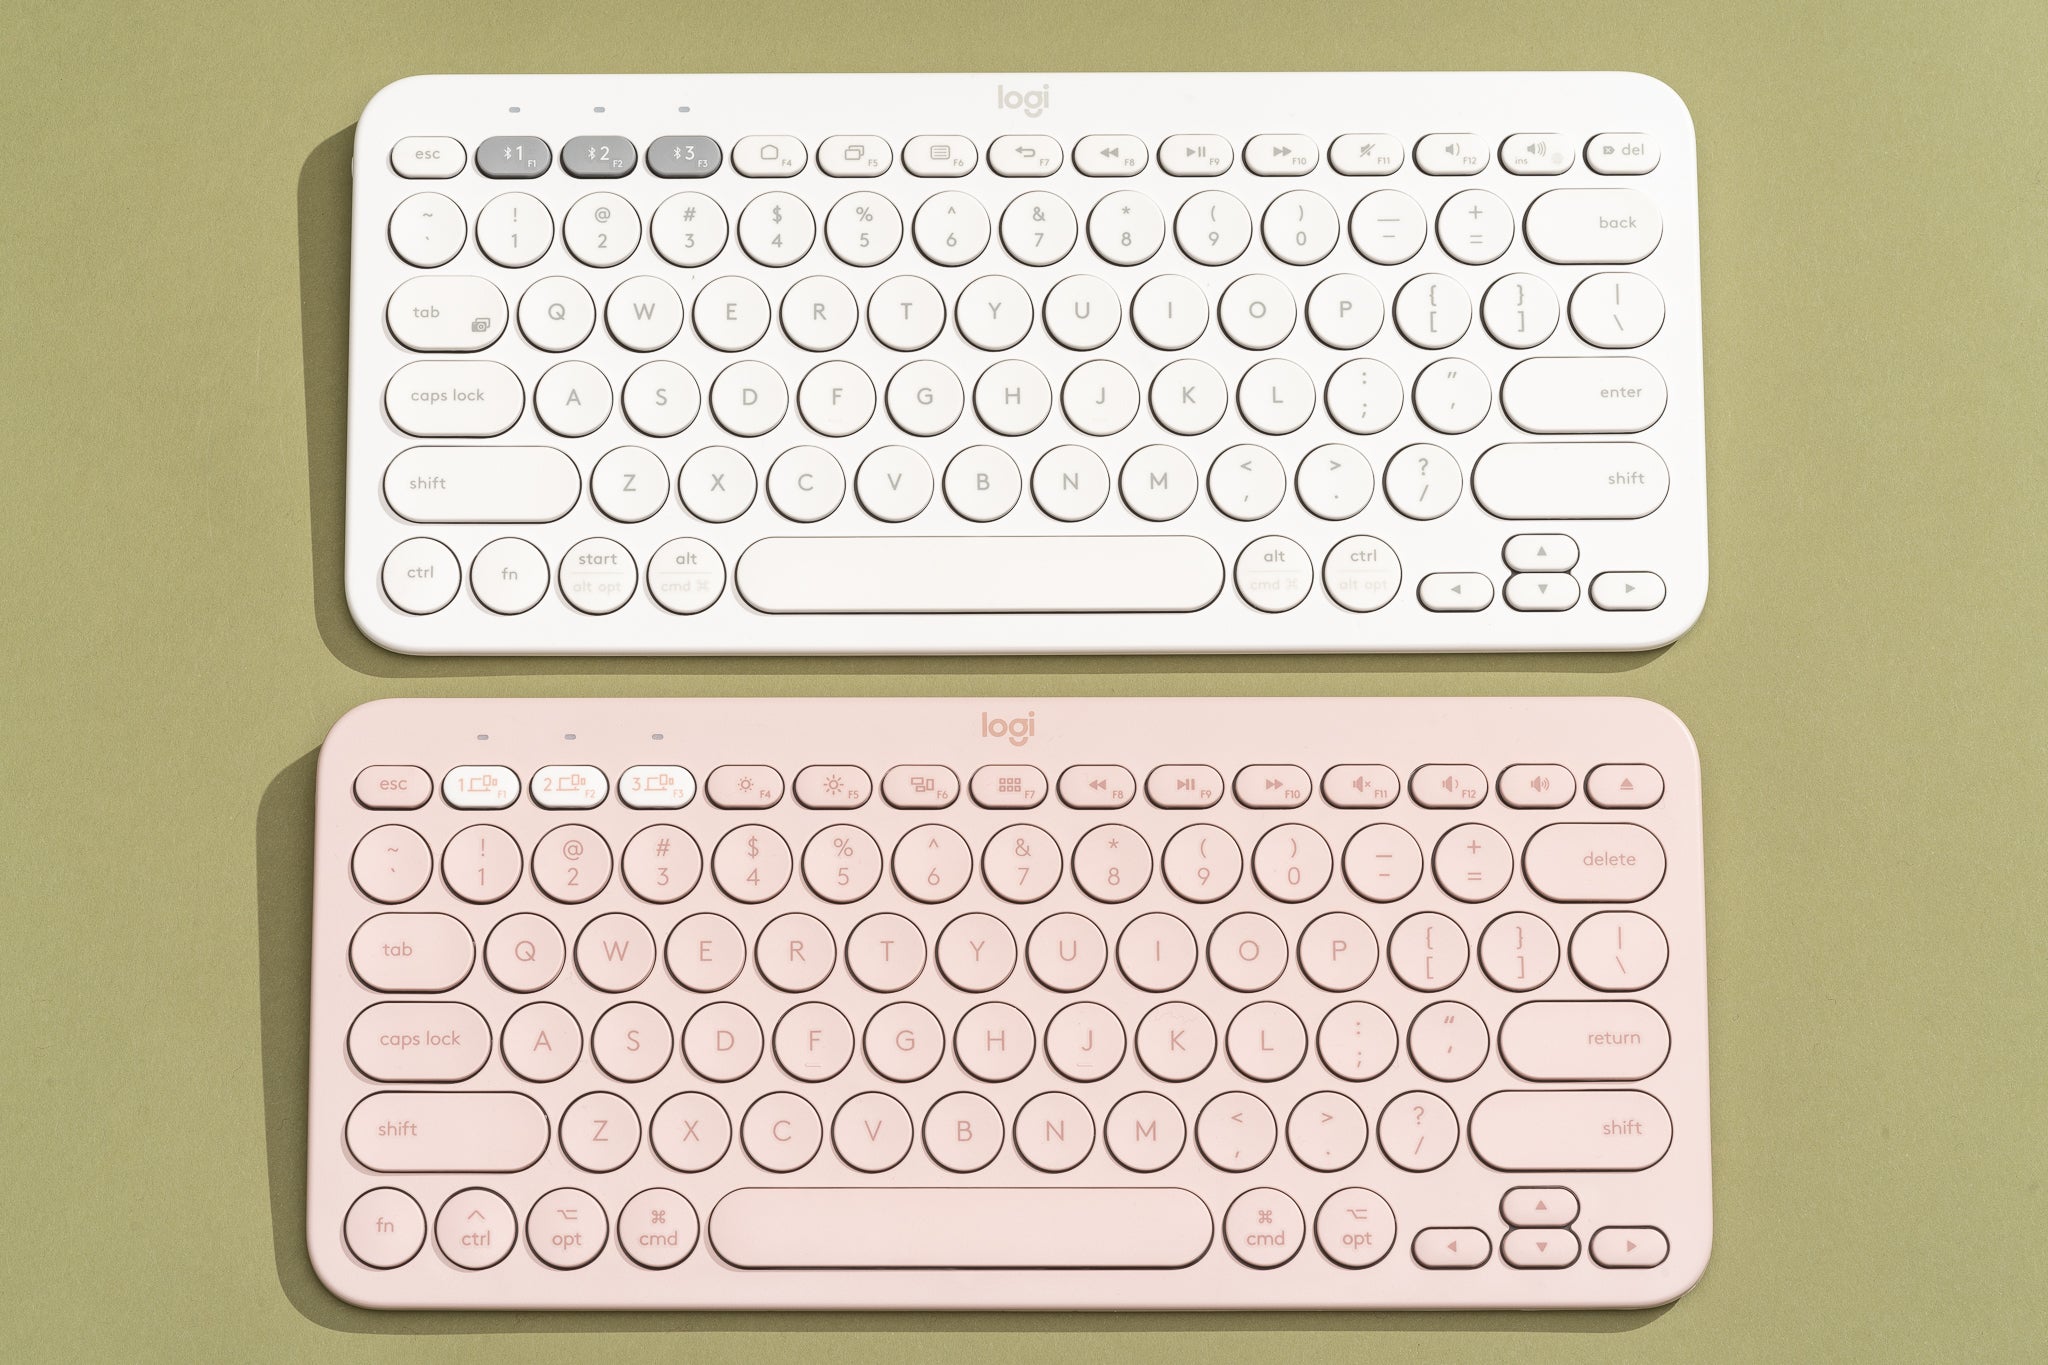 best mac like keyboard for pc